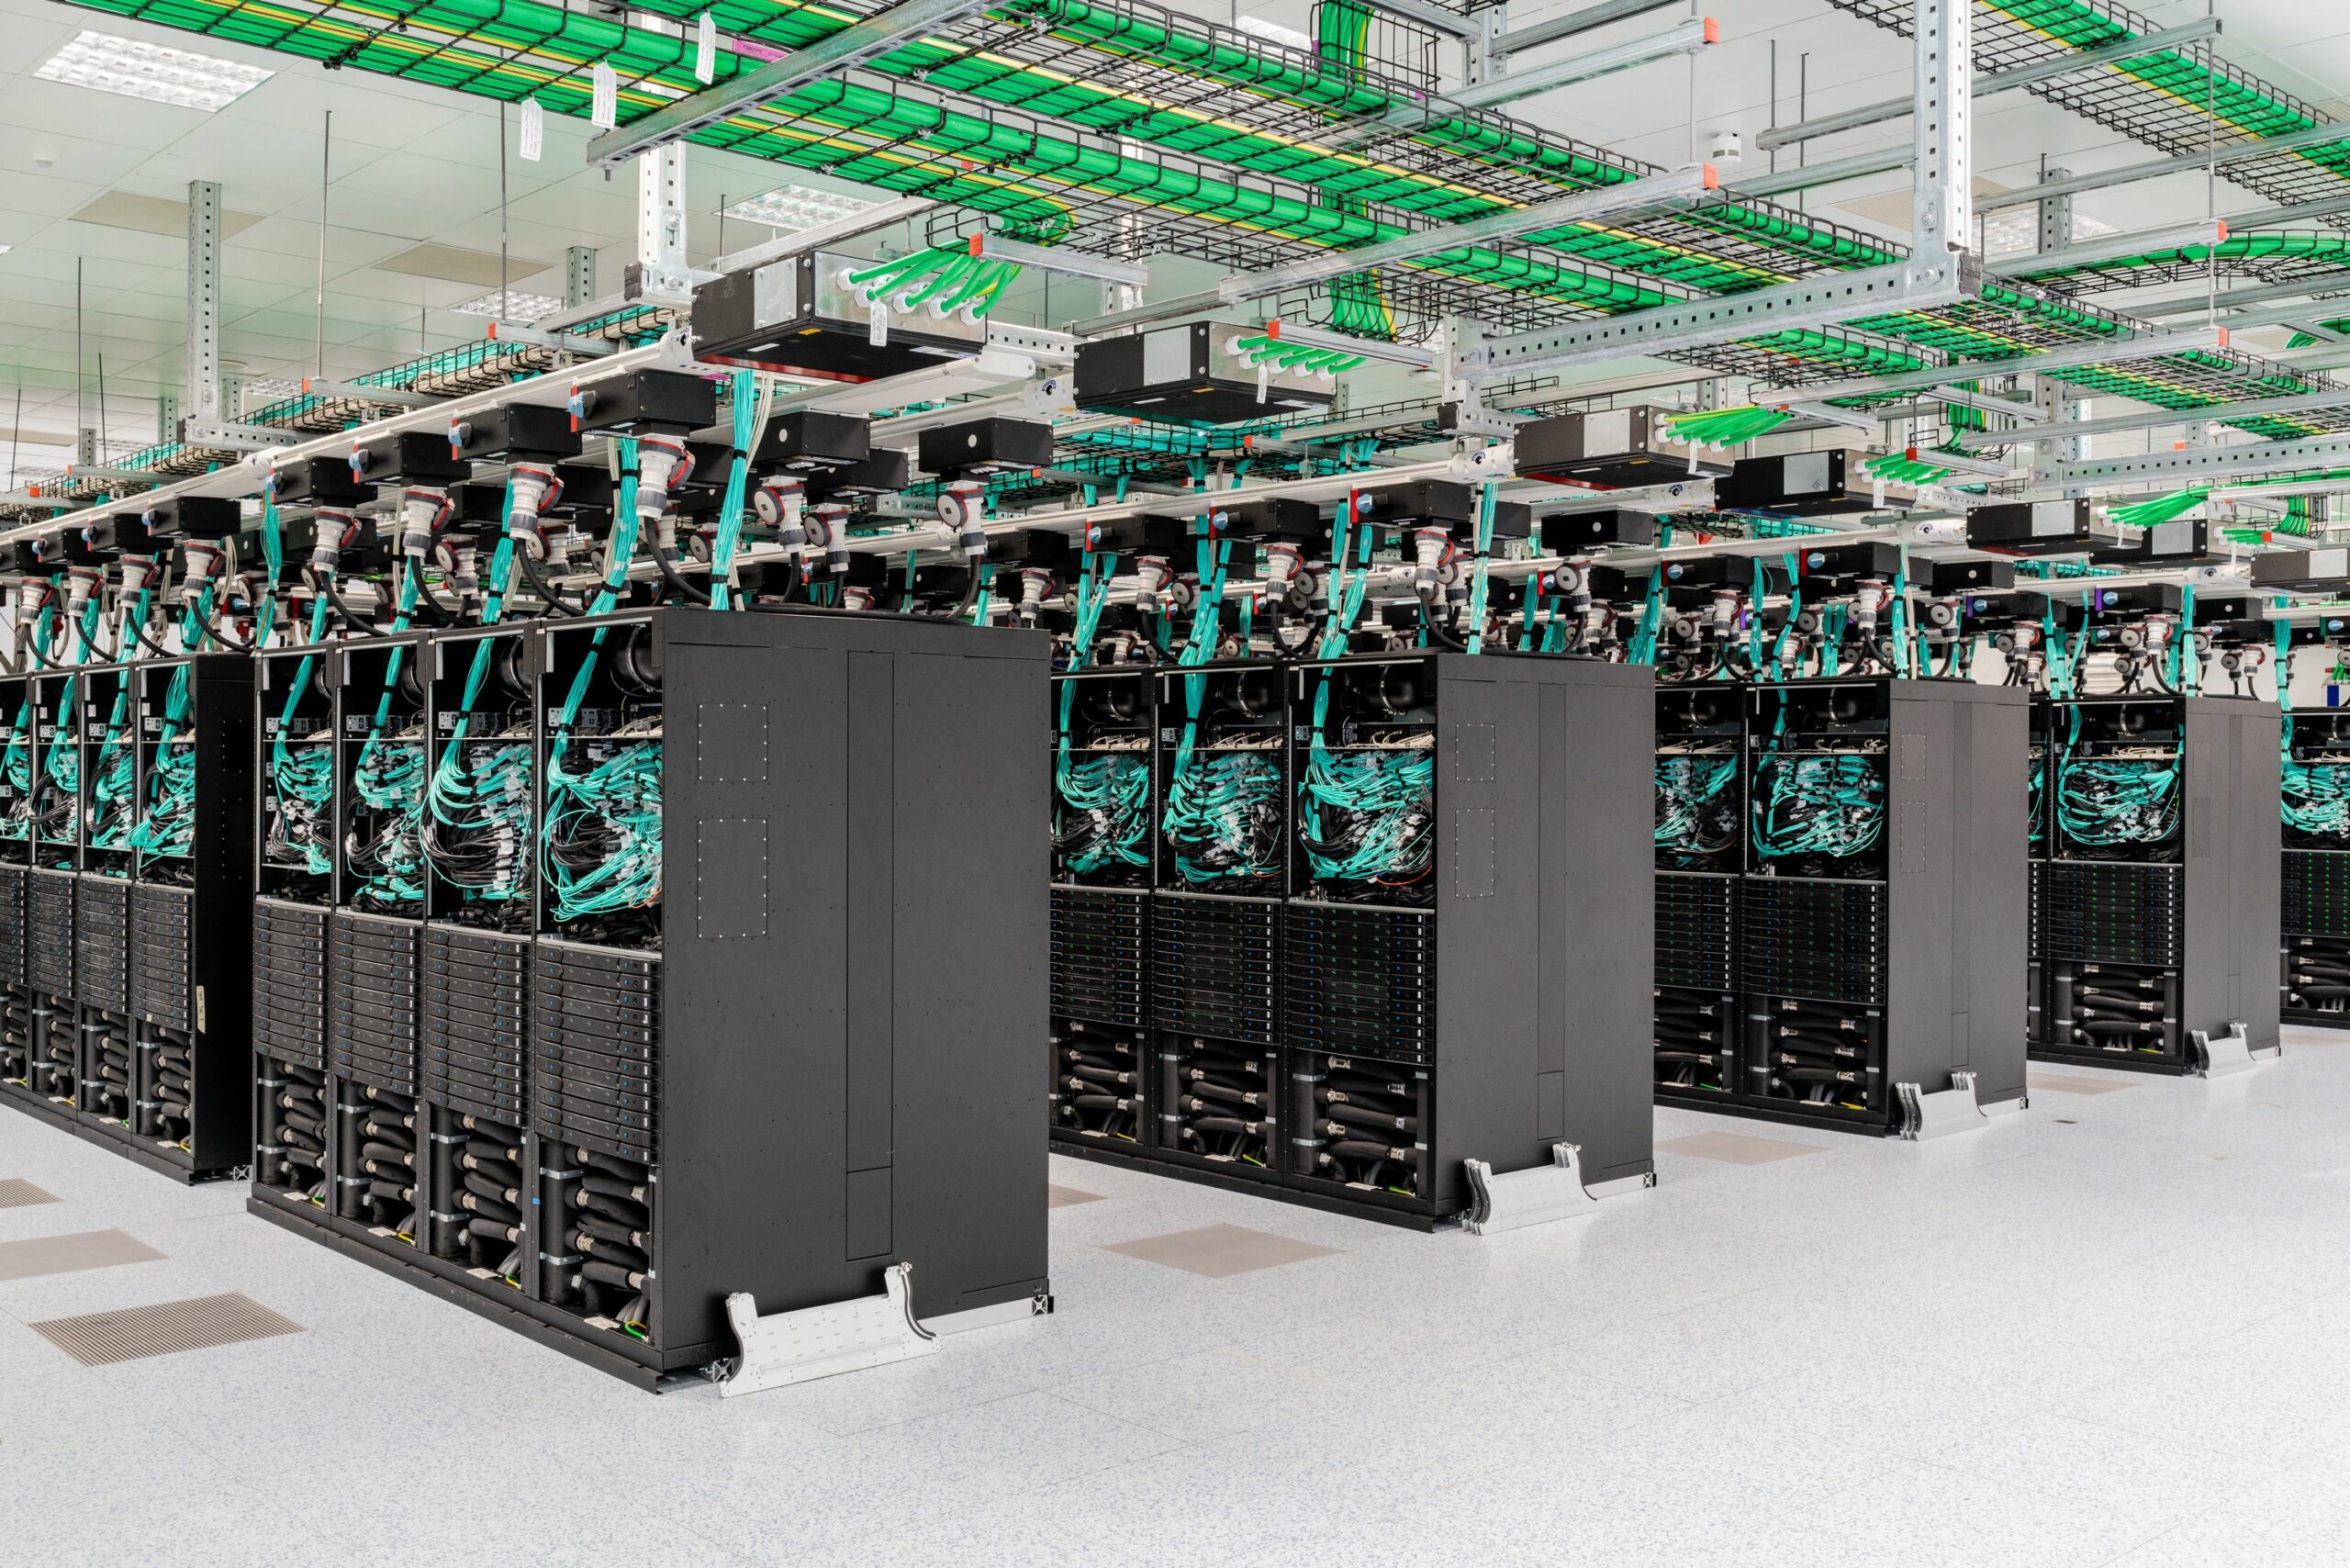 Supercomputing cabinets